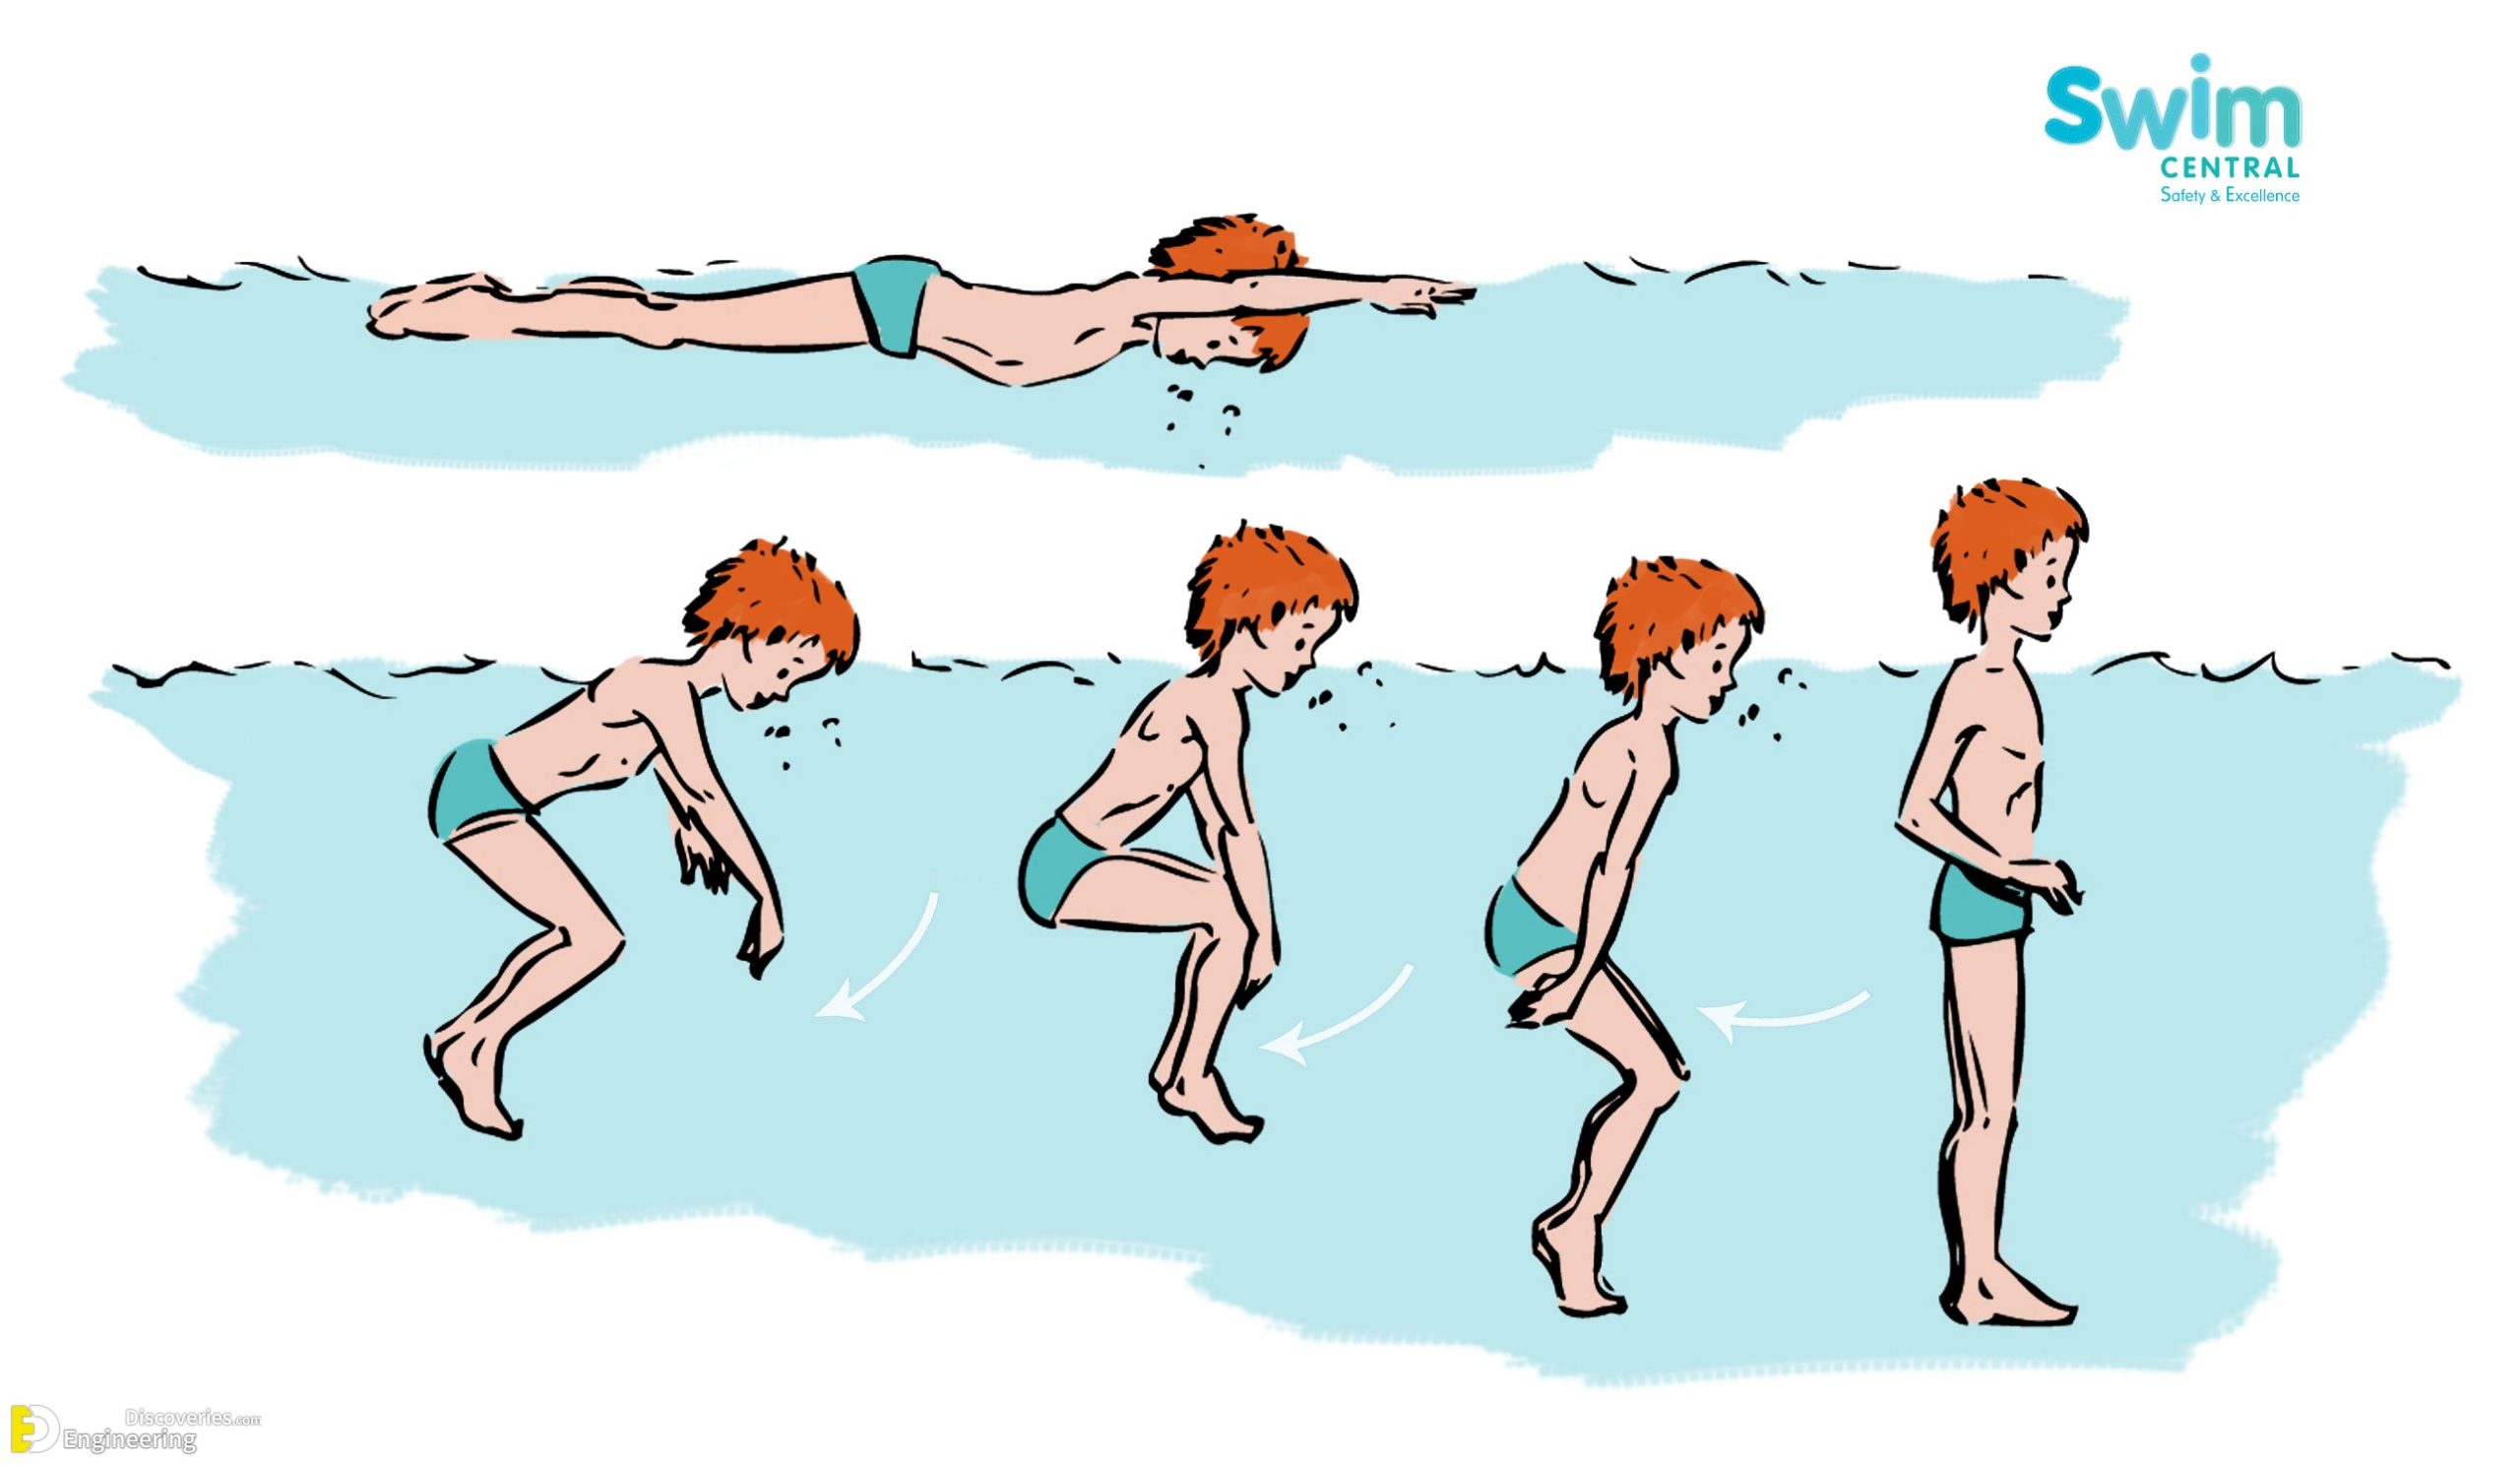 6 Basic Swimming Skills Everyone Should Learn